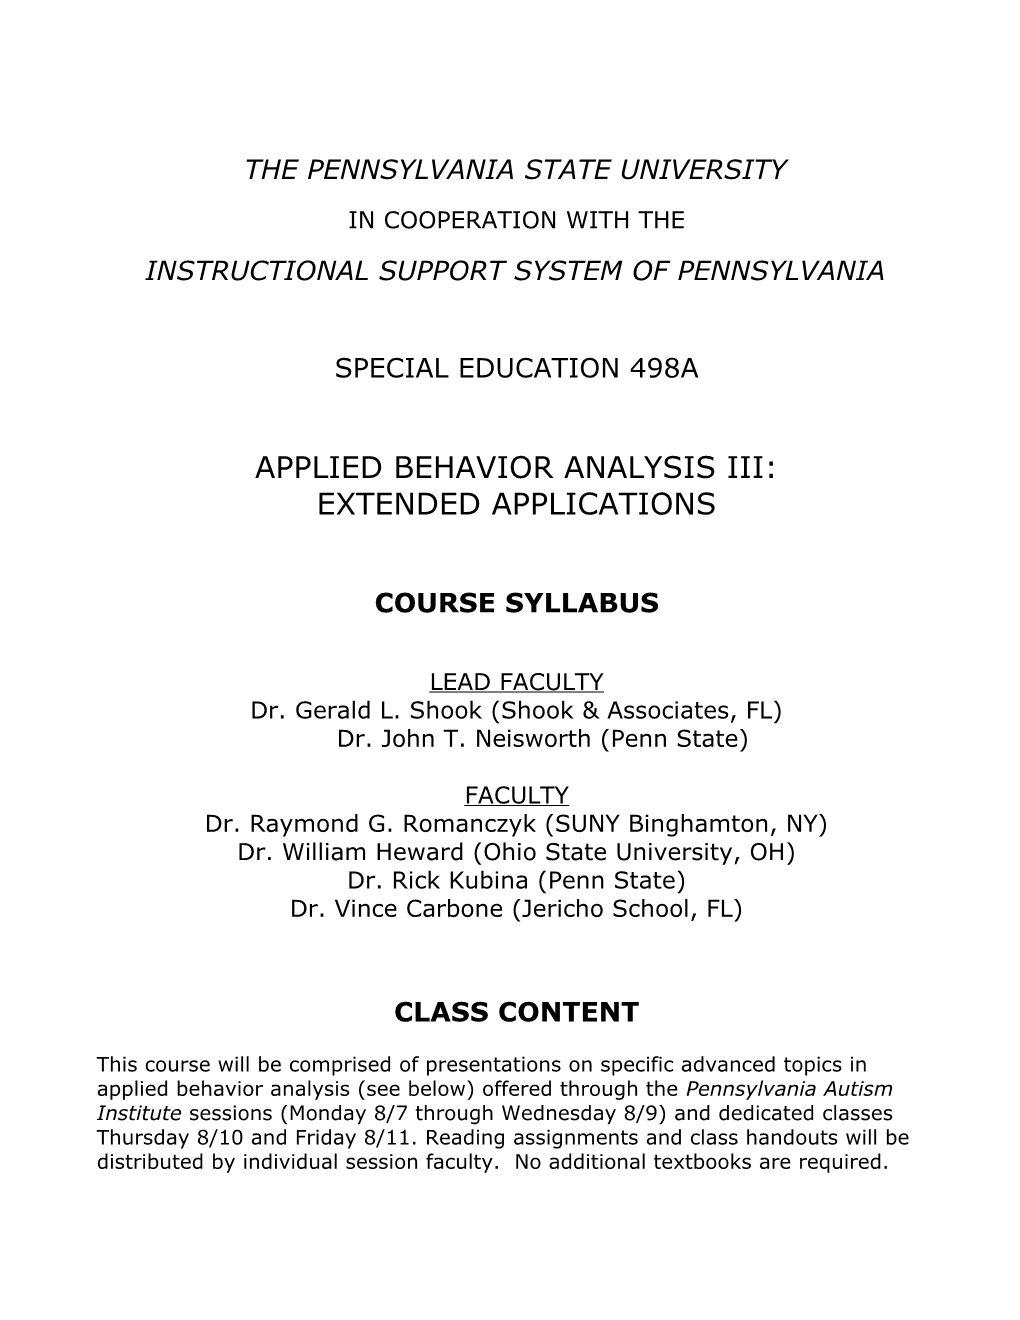 Pennsylvania State University s1